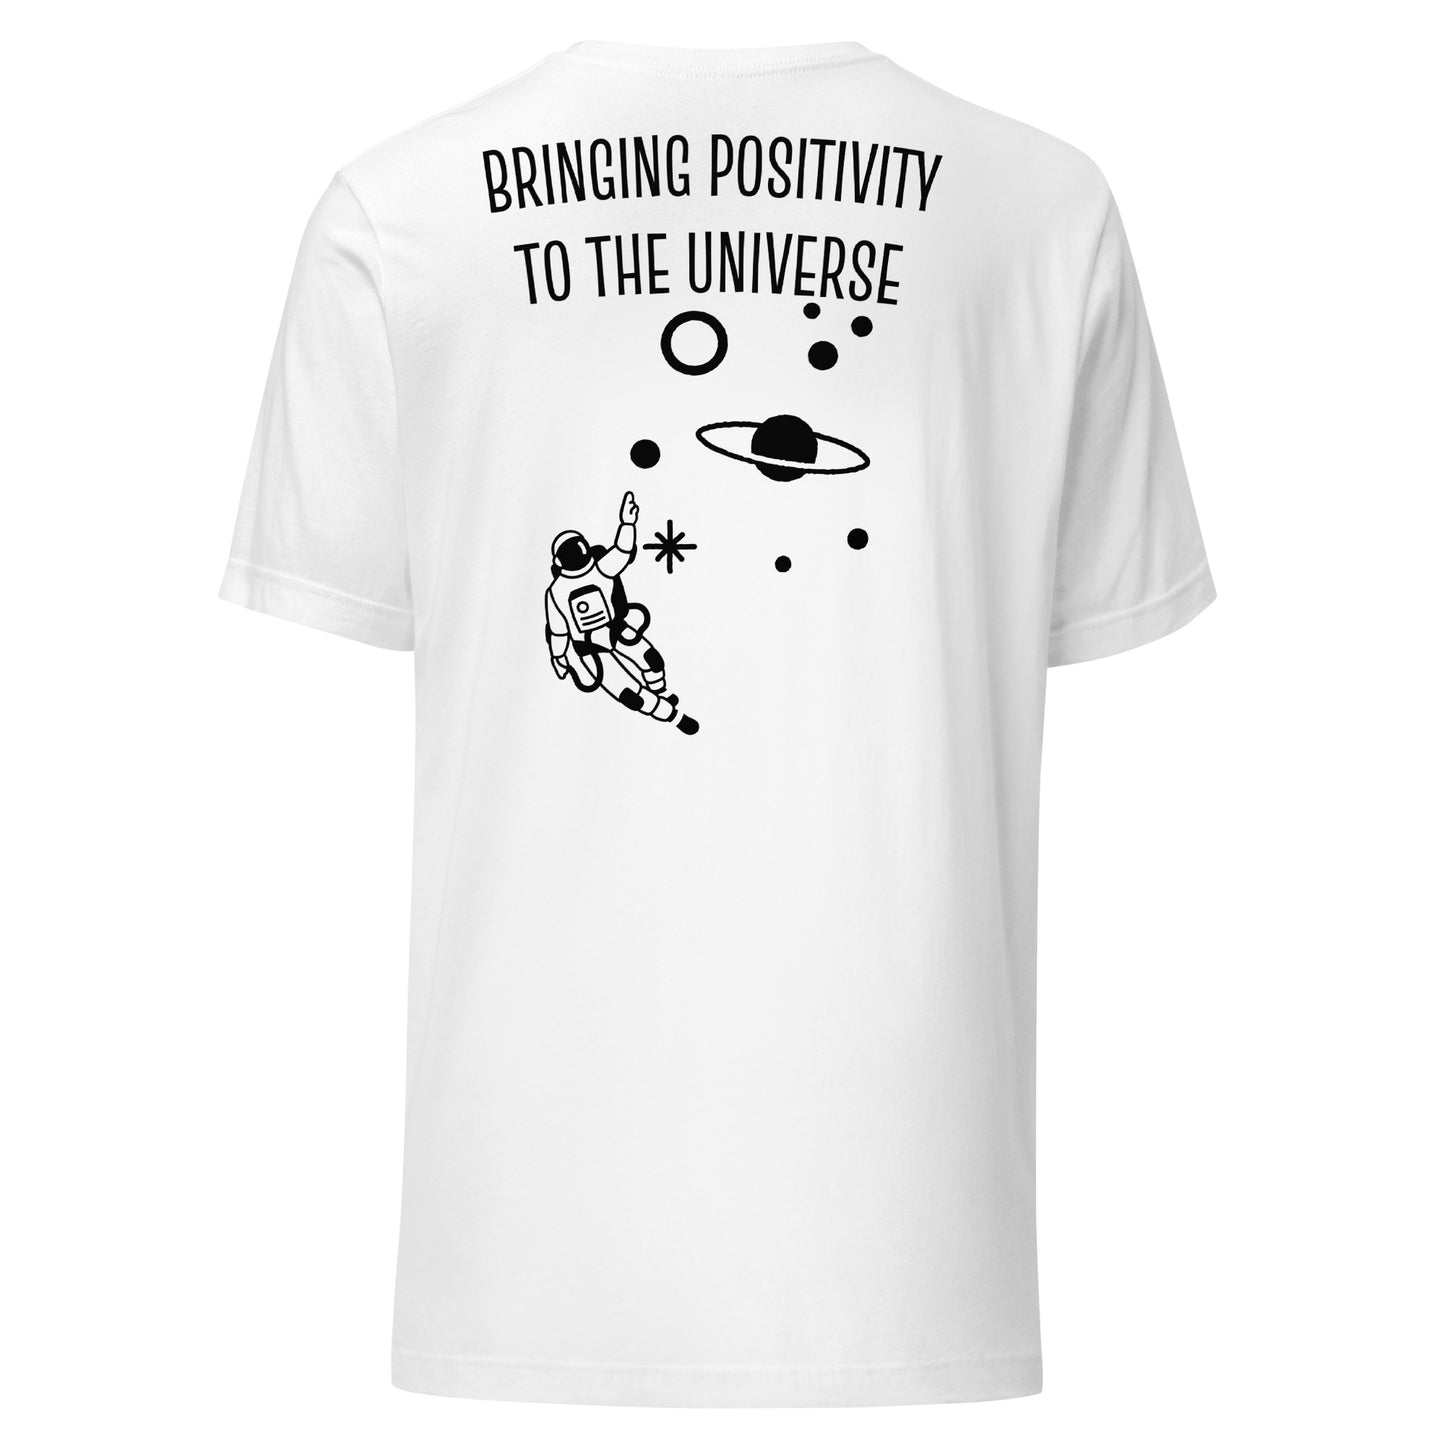 U.C Logo & Bringing Positivity t-shirt